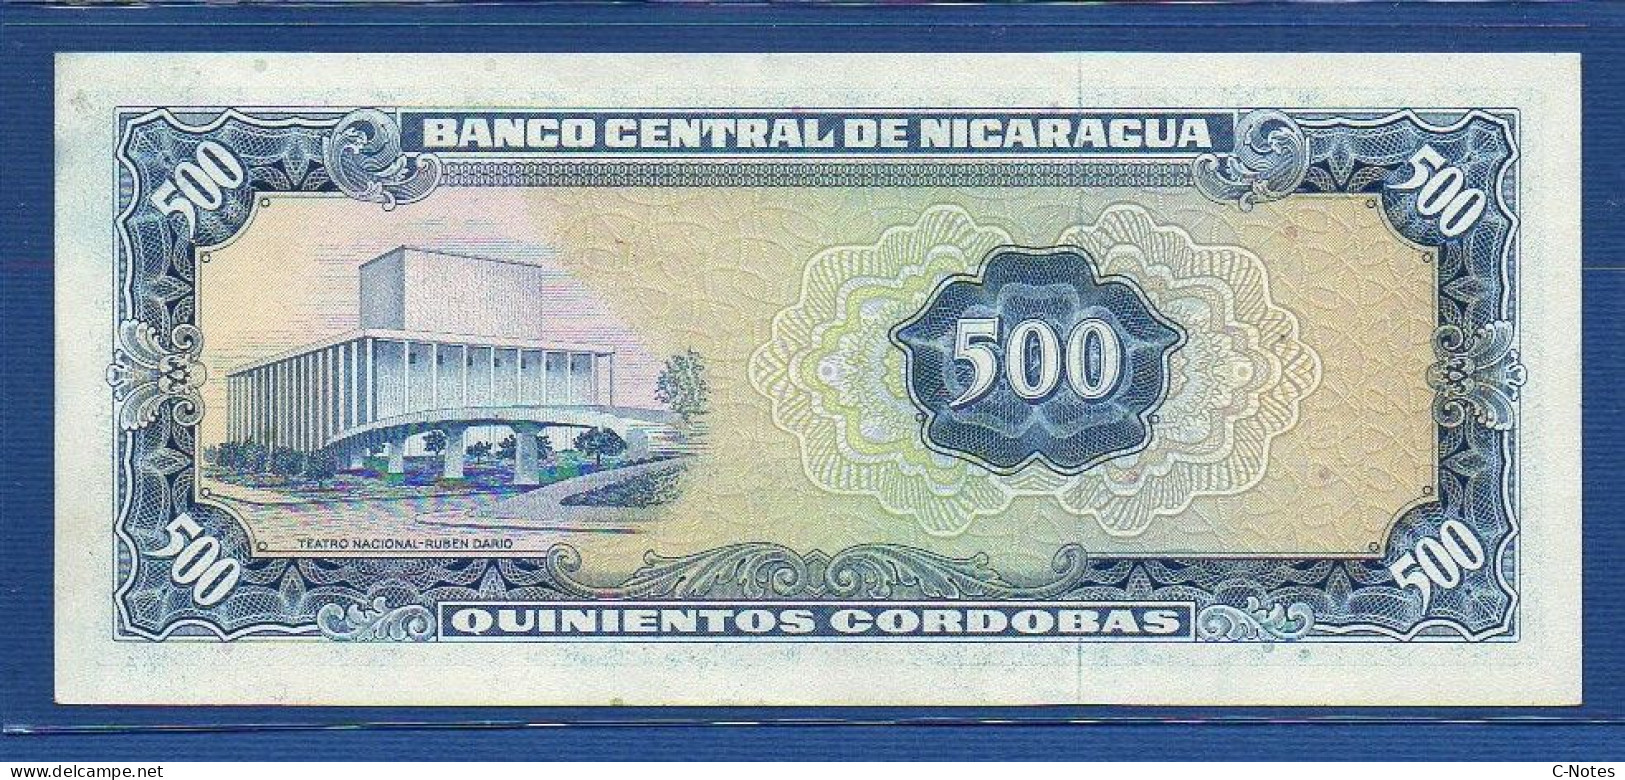 NICARAGUA - P.133 – 500 Córdobas 1979 AUNC, S/n E 0675758 - Nicaragua